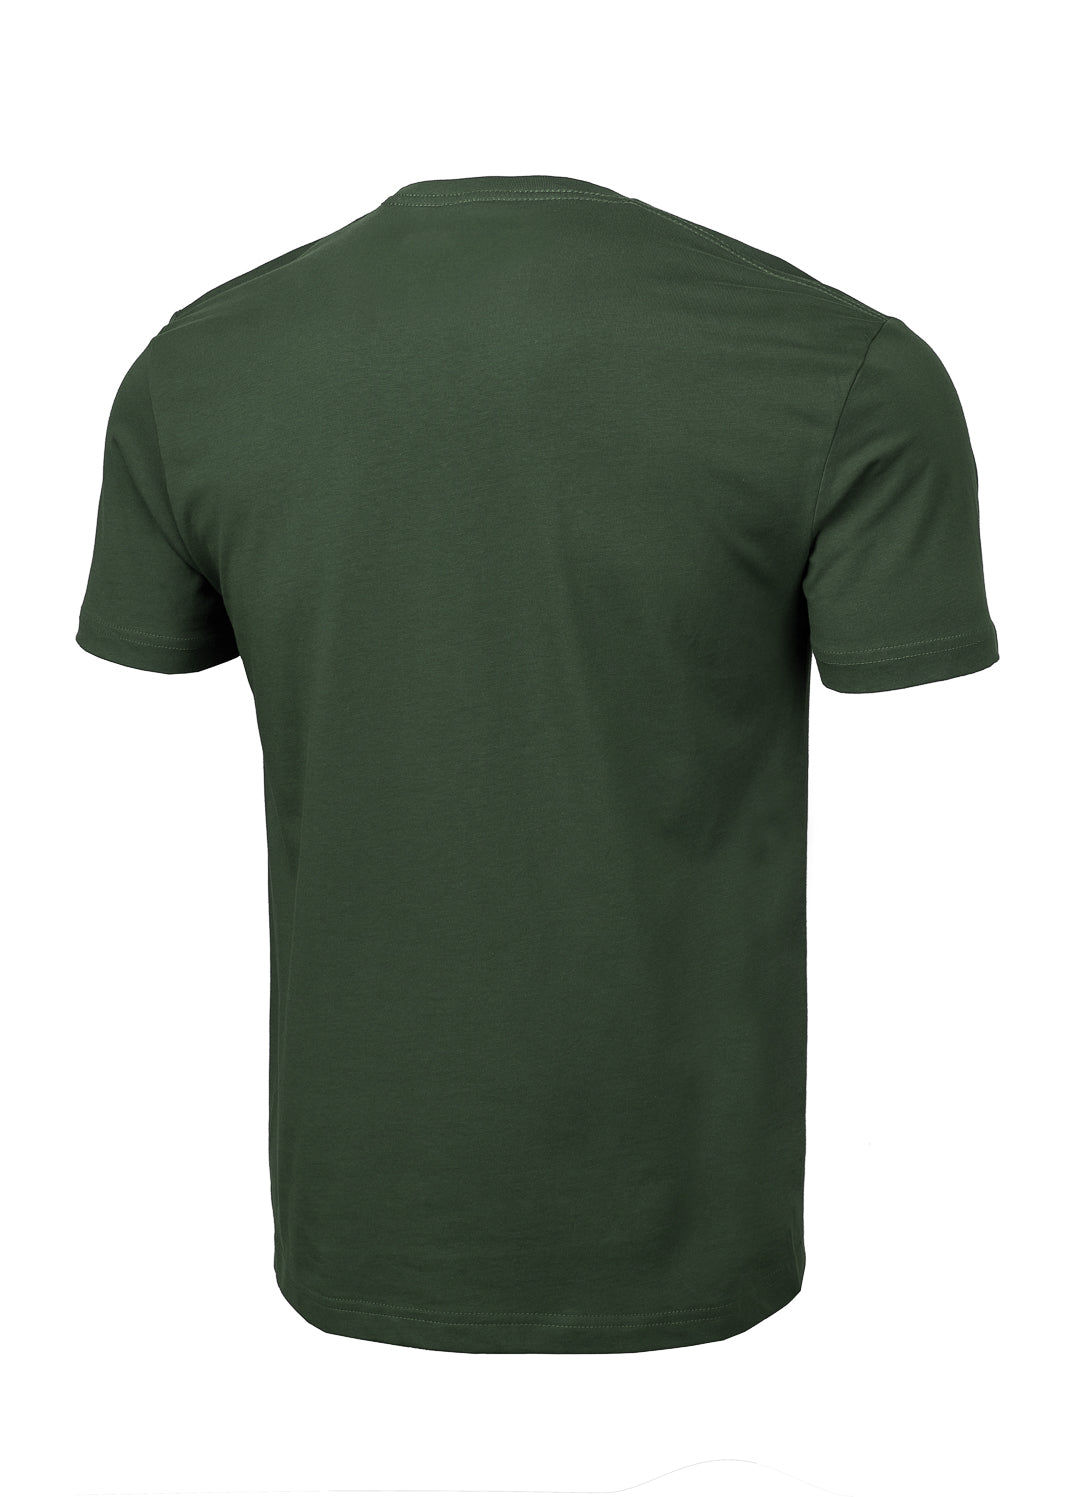 KEEP ROLLING 22 Grassy Green T-shirt